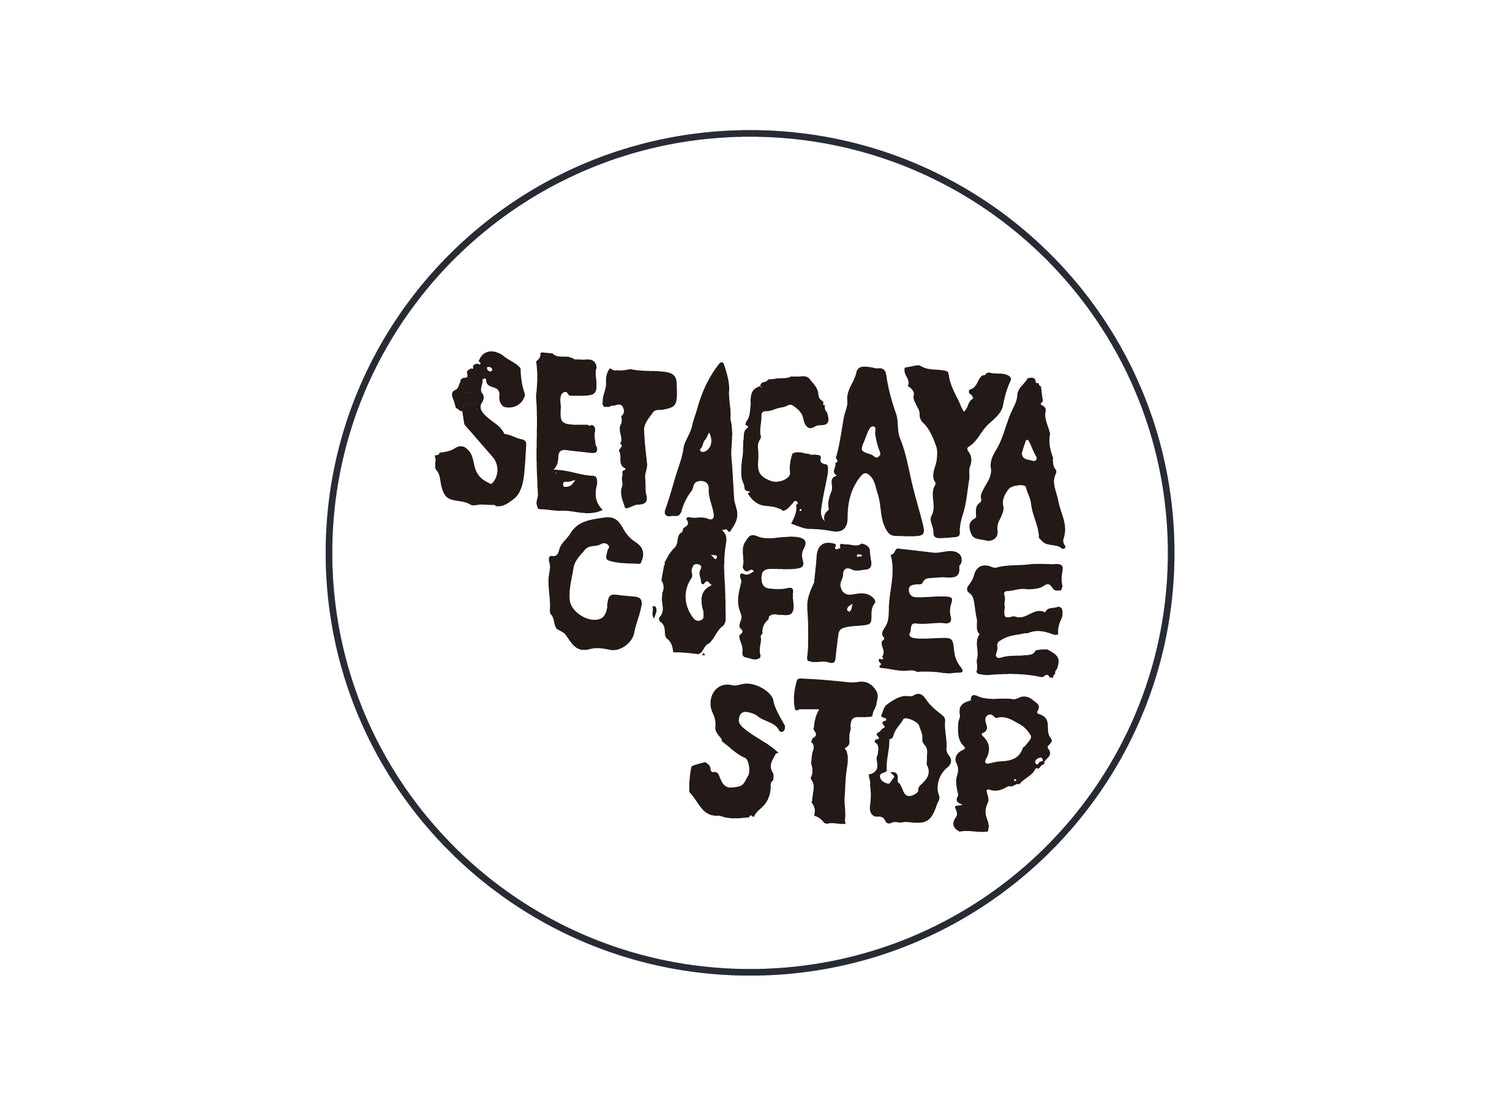 SETAGAYA COFFEE STOP